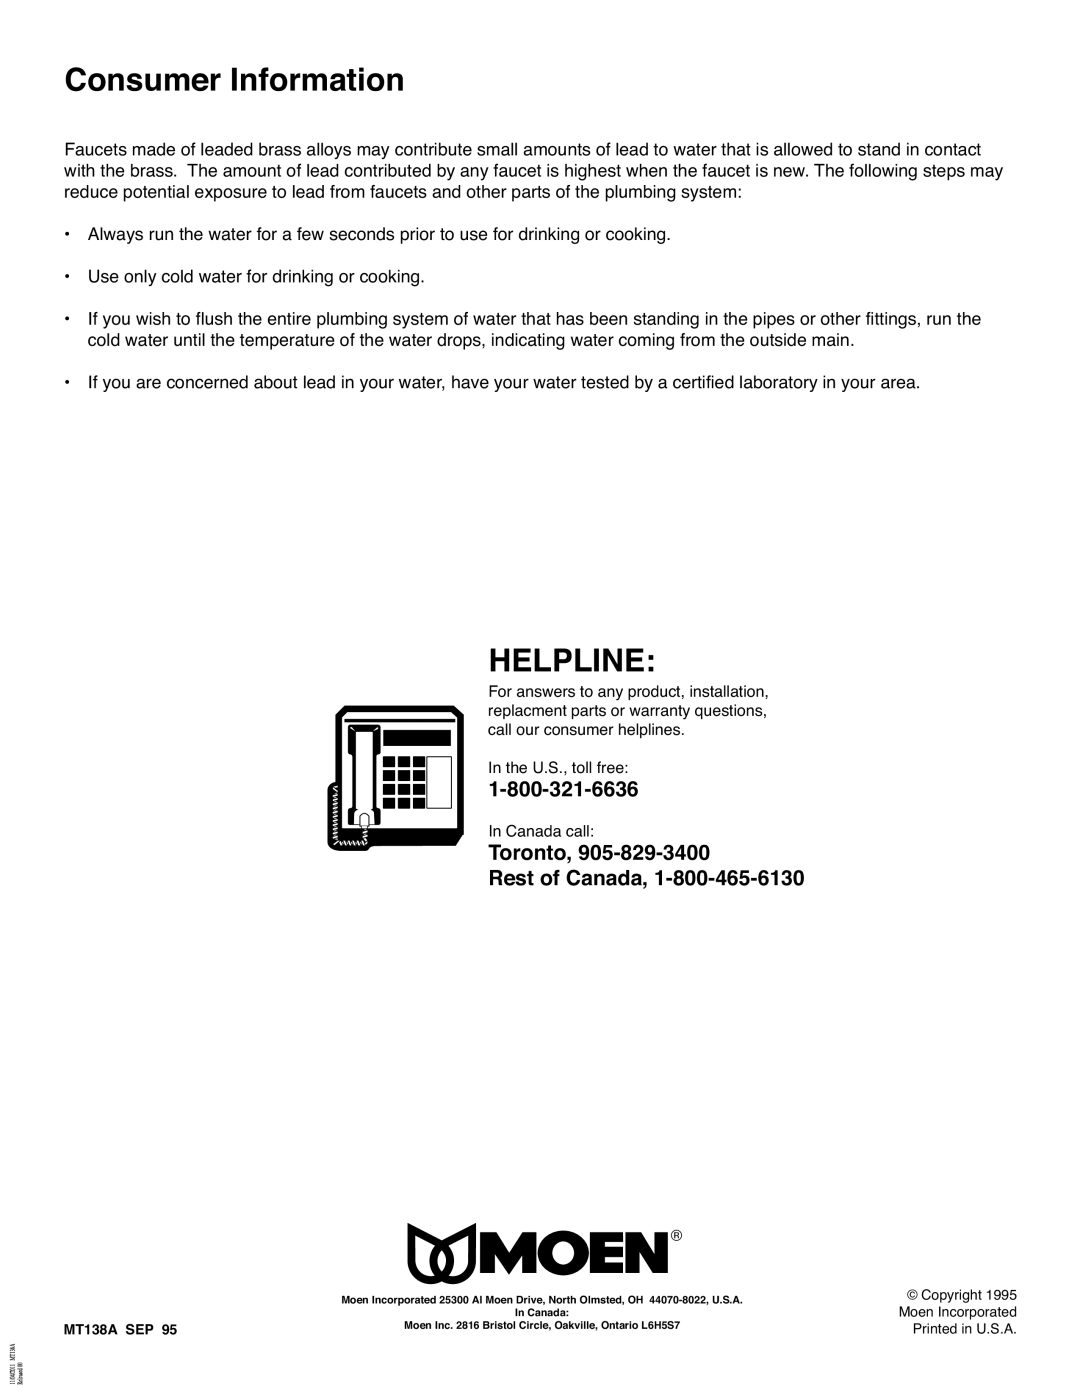 Moen 8415, 8450, 8410, 8455, 8416 installation instructions Consumer Information, Helpline, Toronto Rest of Canada 